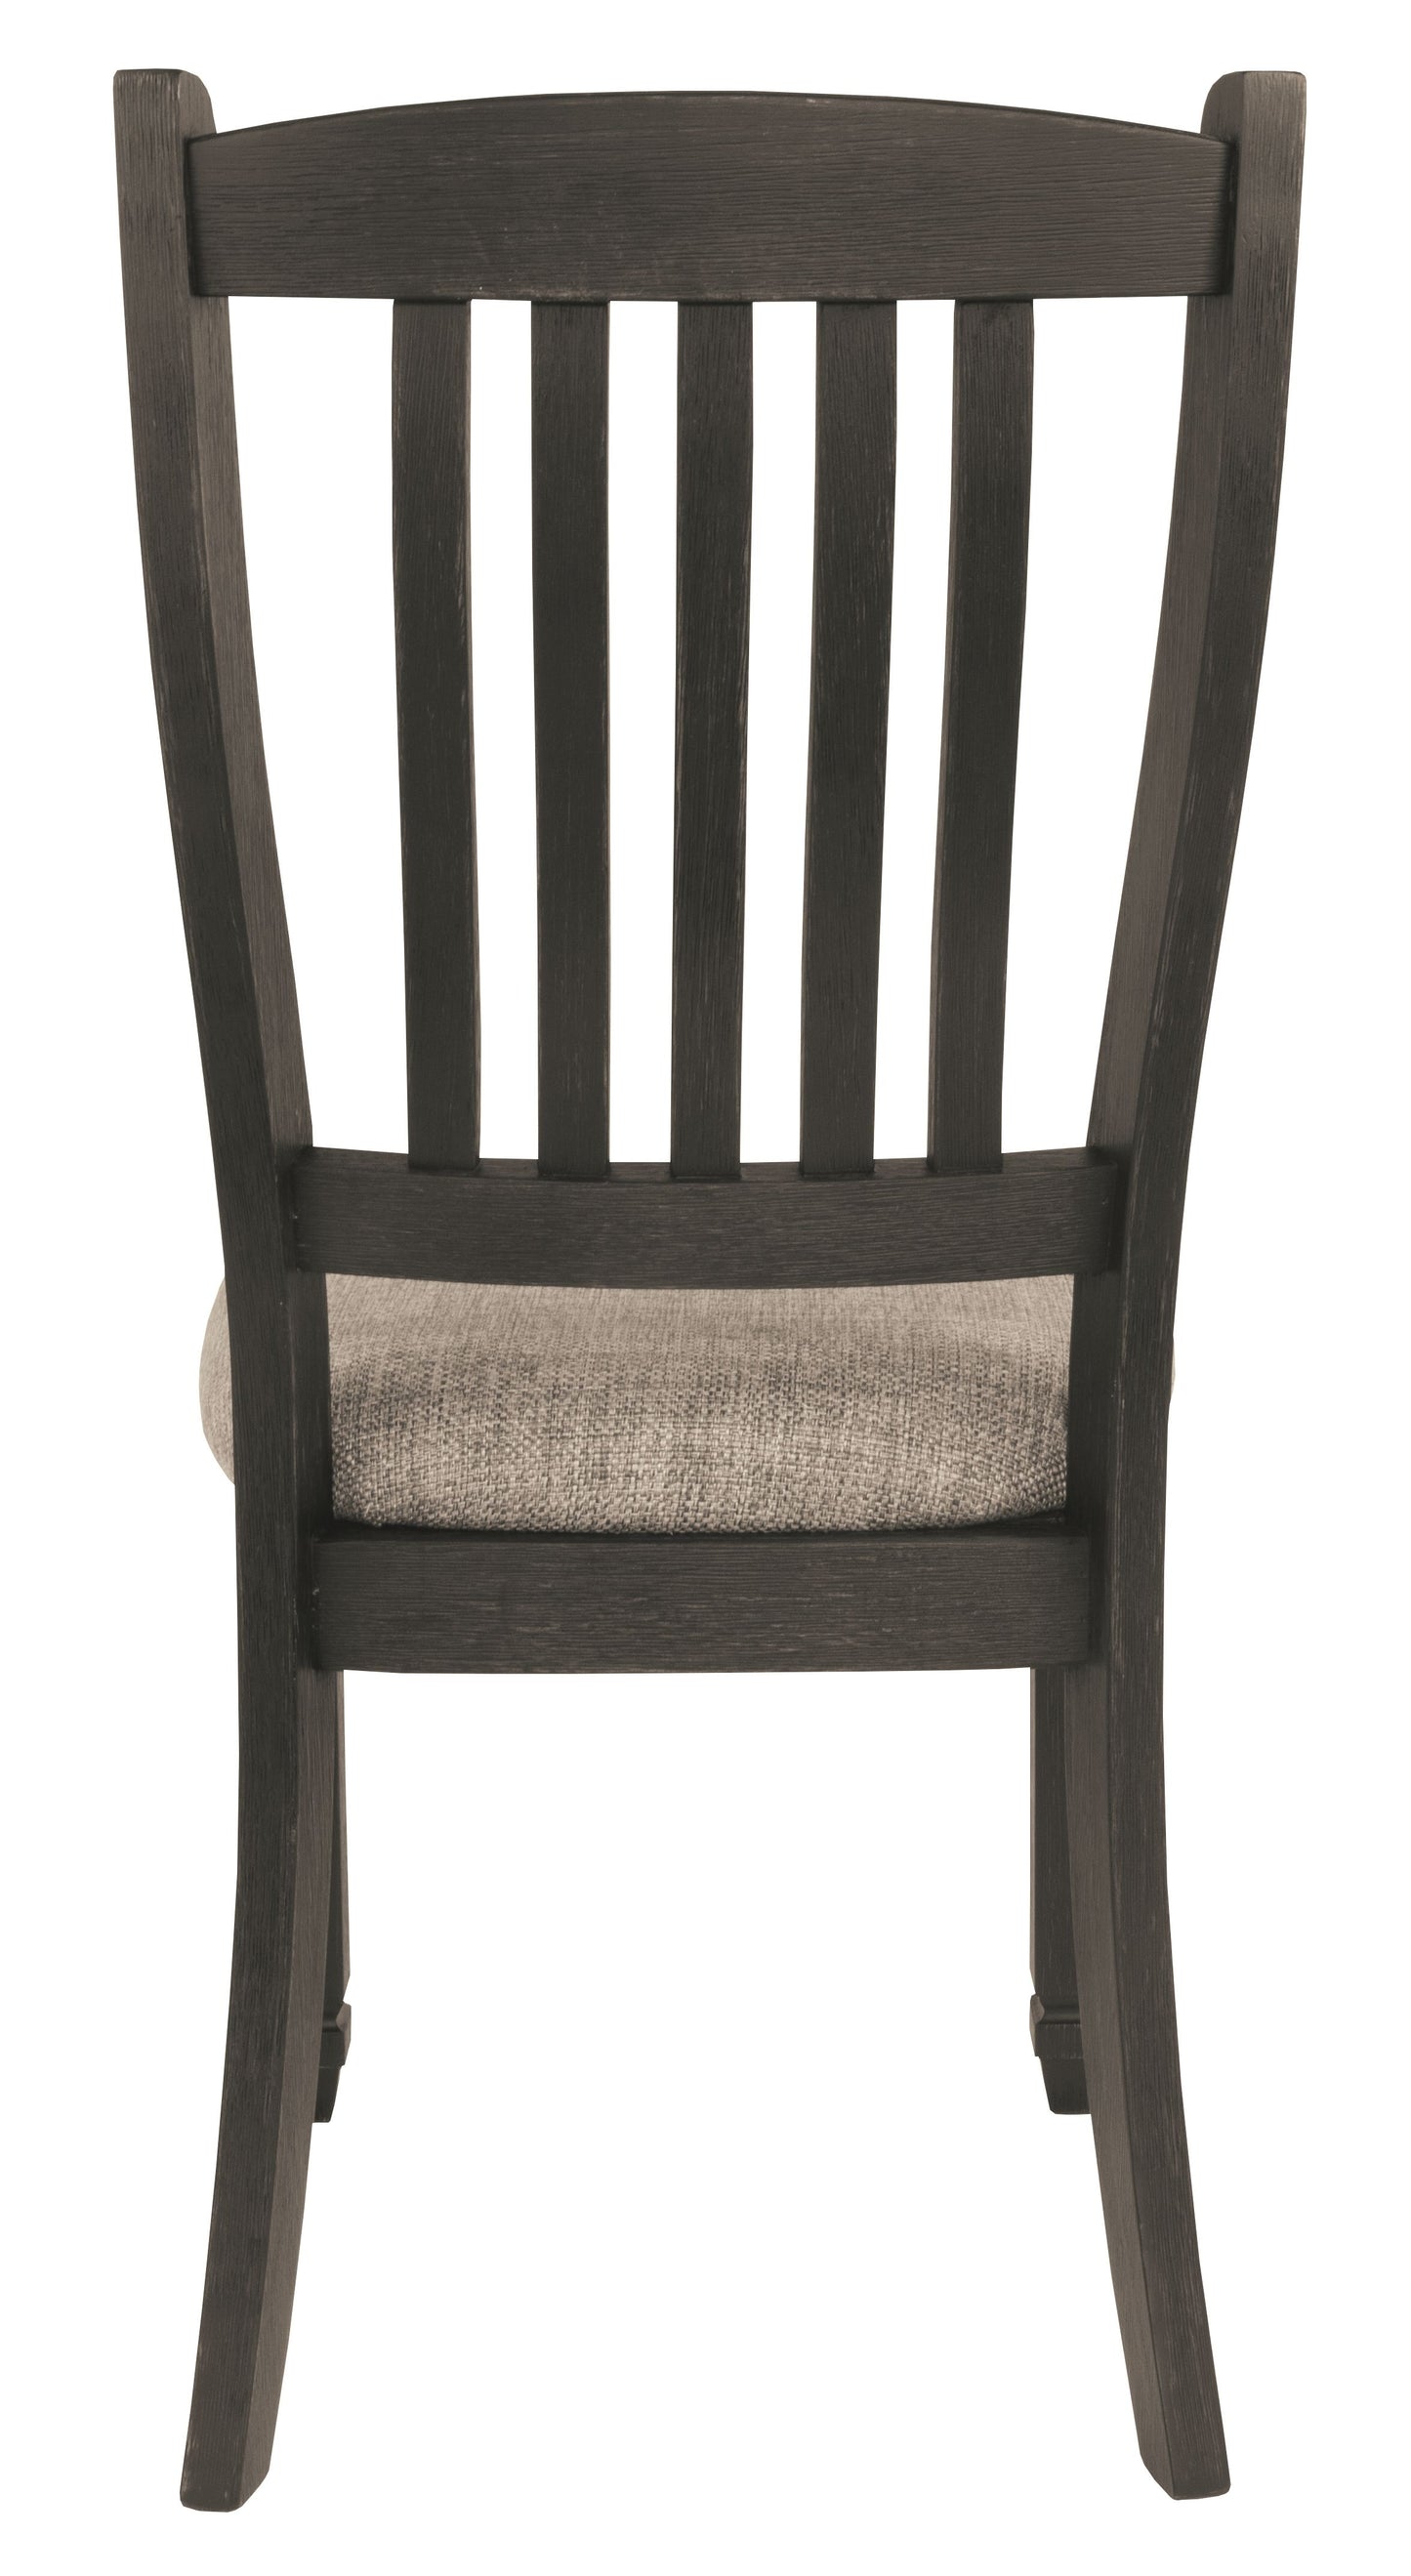 Tyler - Black / Grayish Brown - Dining Uph Side Chair (Set of 2) - Slatback